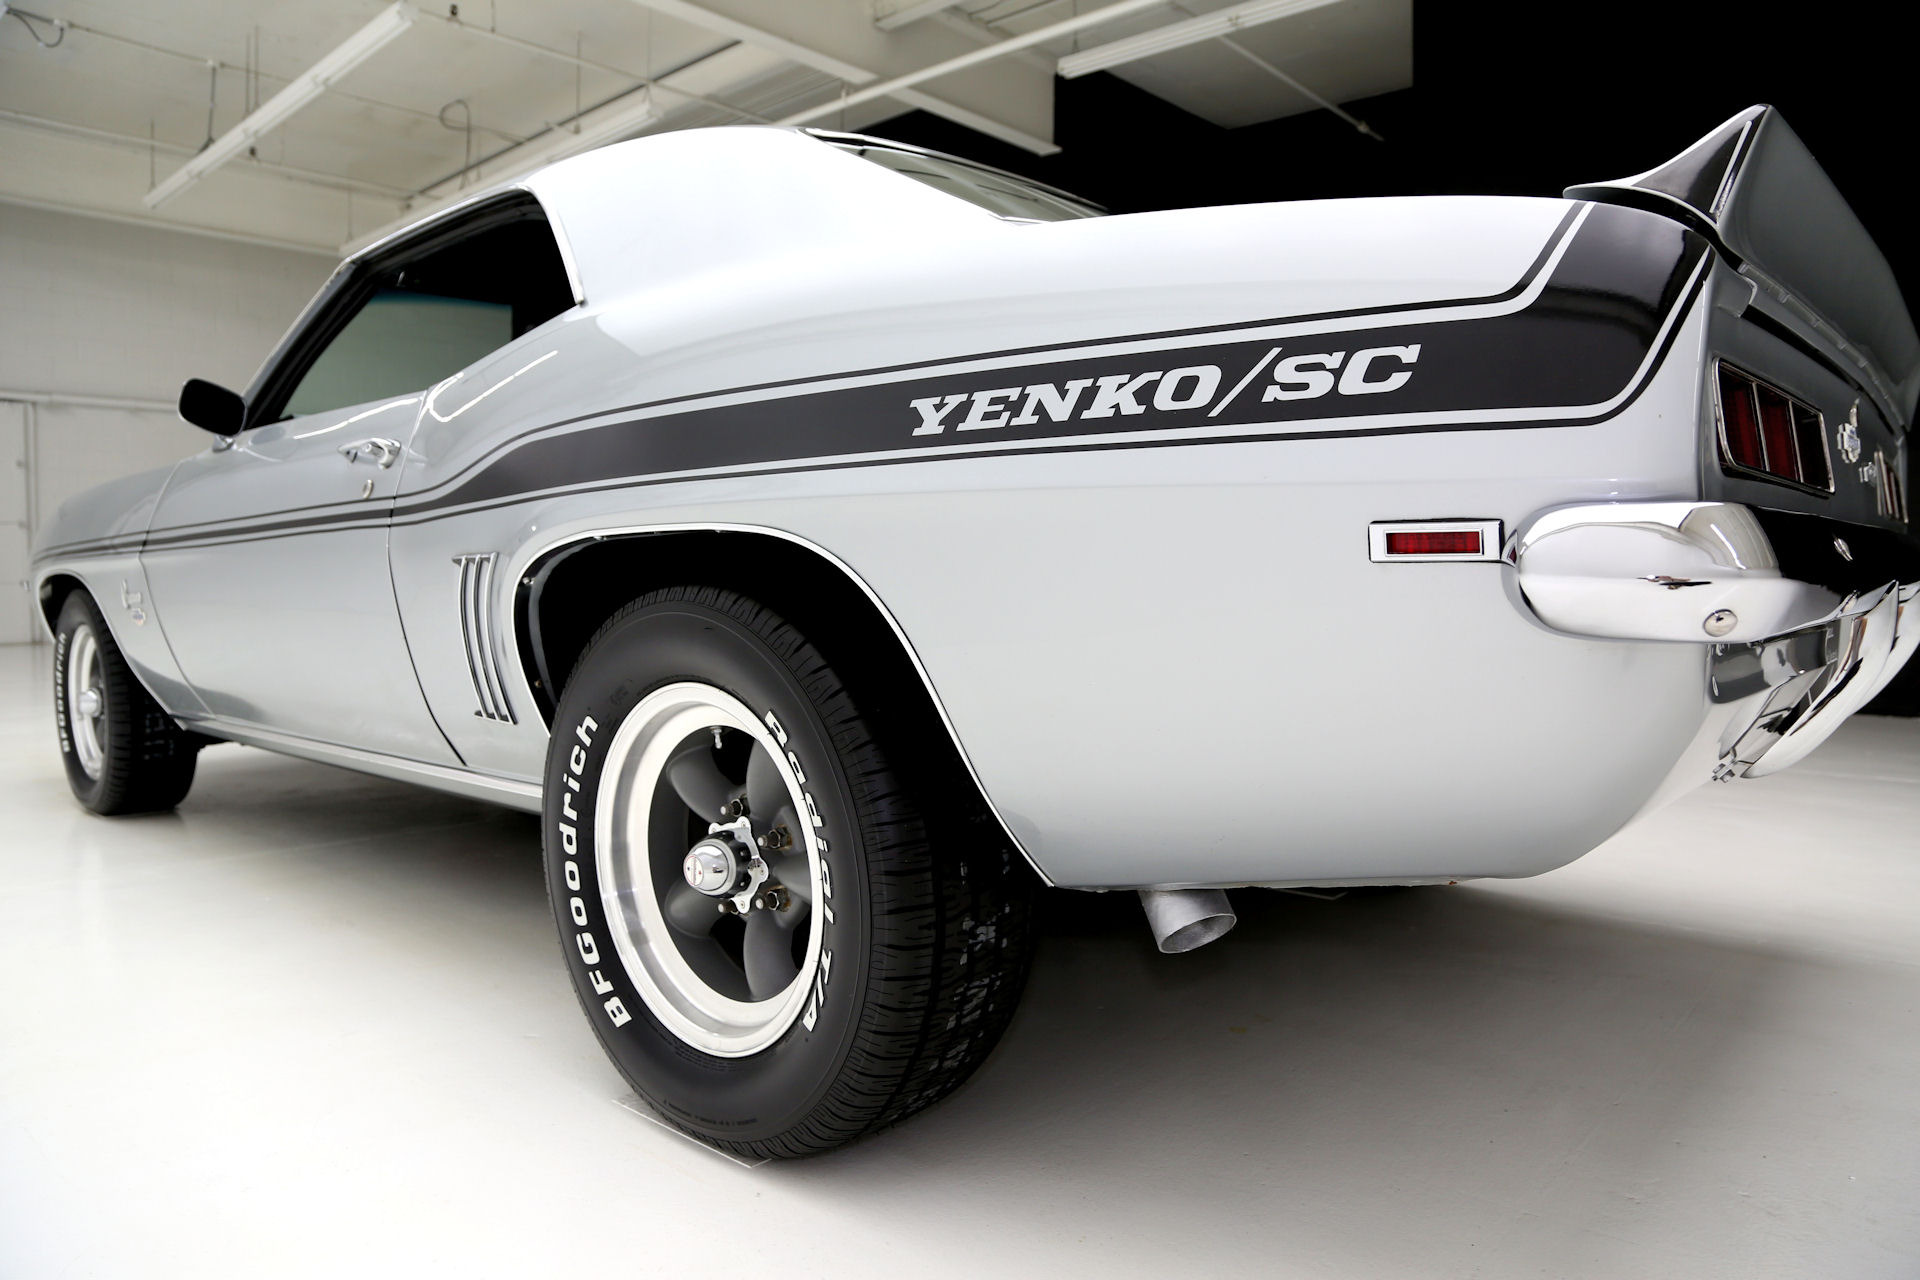 For Sale Used 1969 Chevrolet Camaro Yenko /SC 427 Aluminum Heads | American Dream Machines Des Moines IA 50309